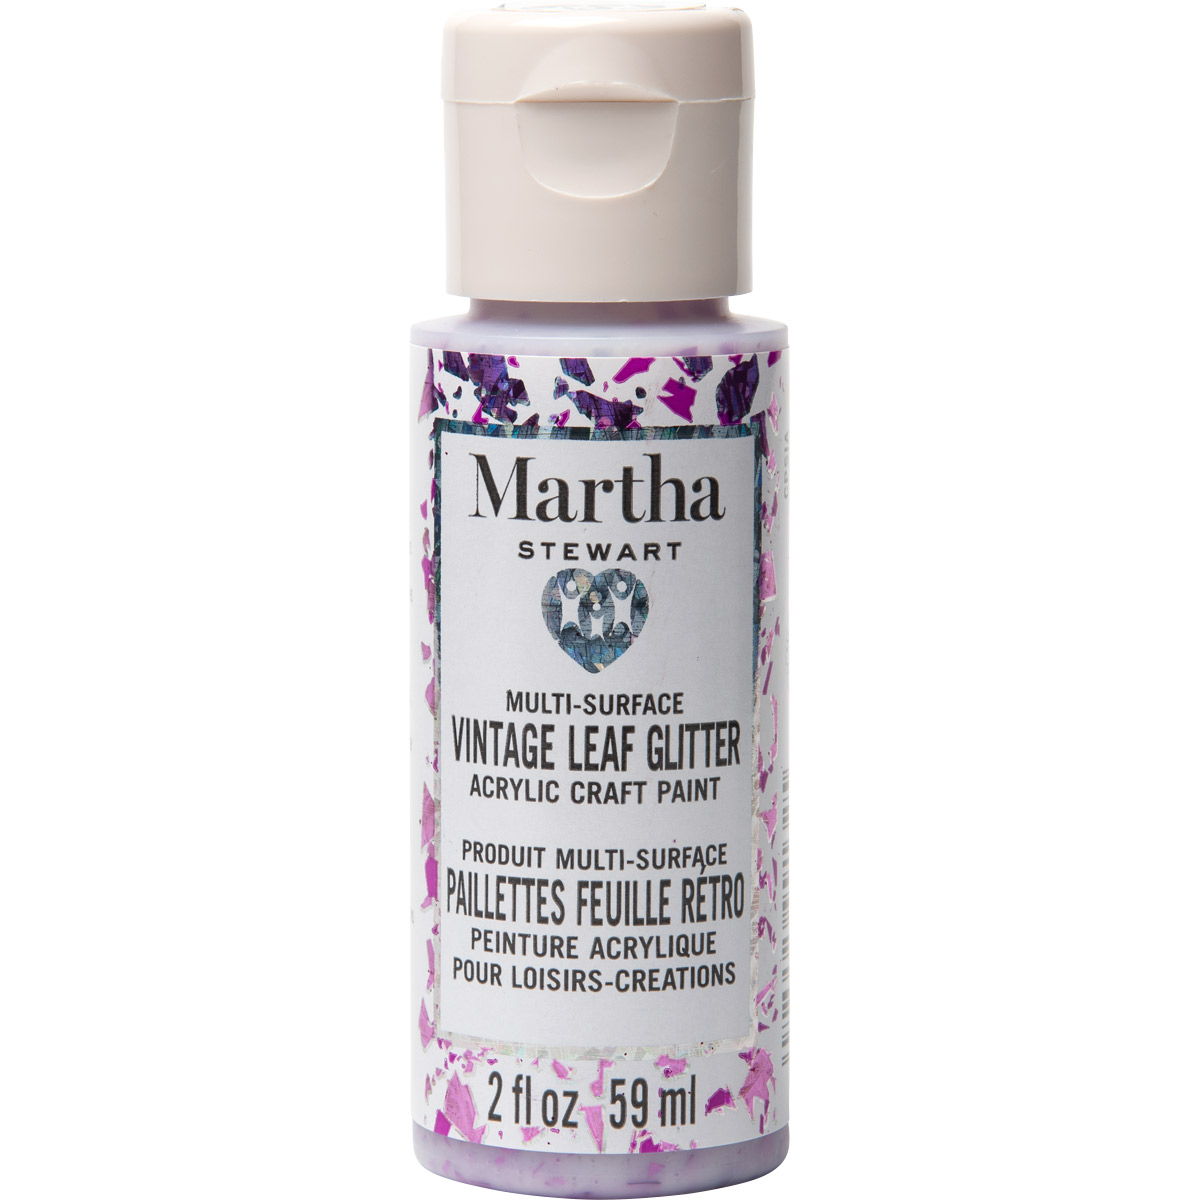 Martha Stewart ® Multi-Surface Vintage Leaf Glitter Acrylic Craft Paint CPSIA - Bubble Gum, 2 oz. - 